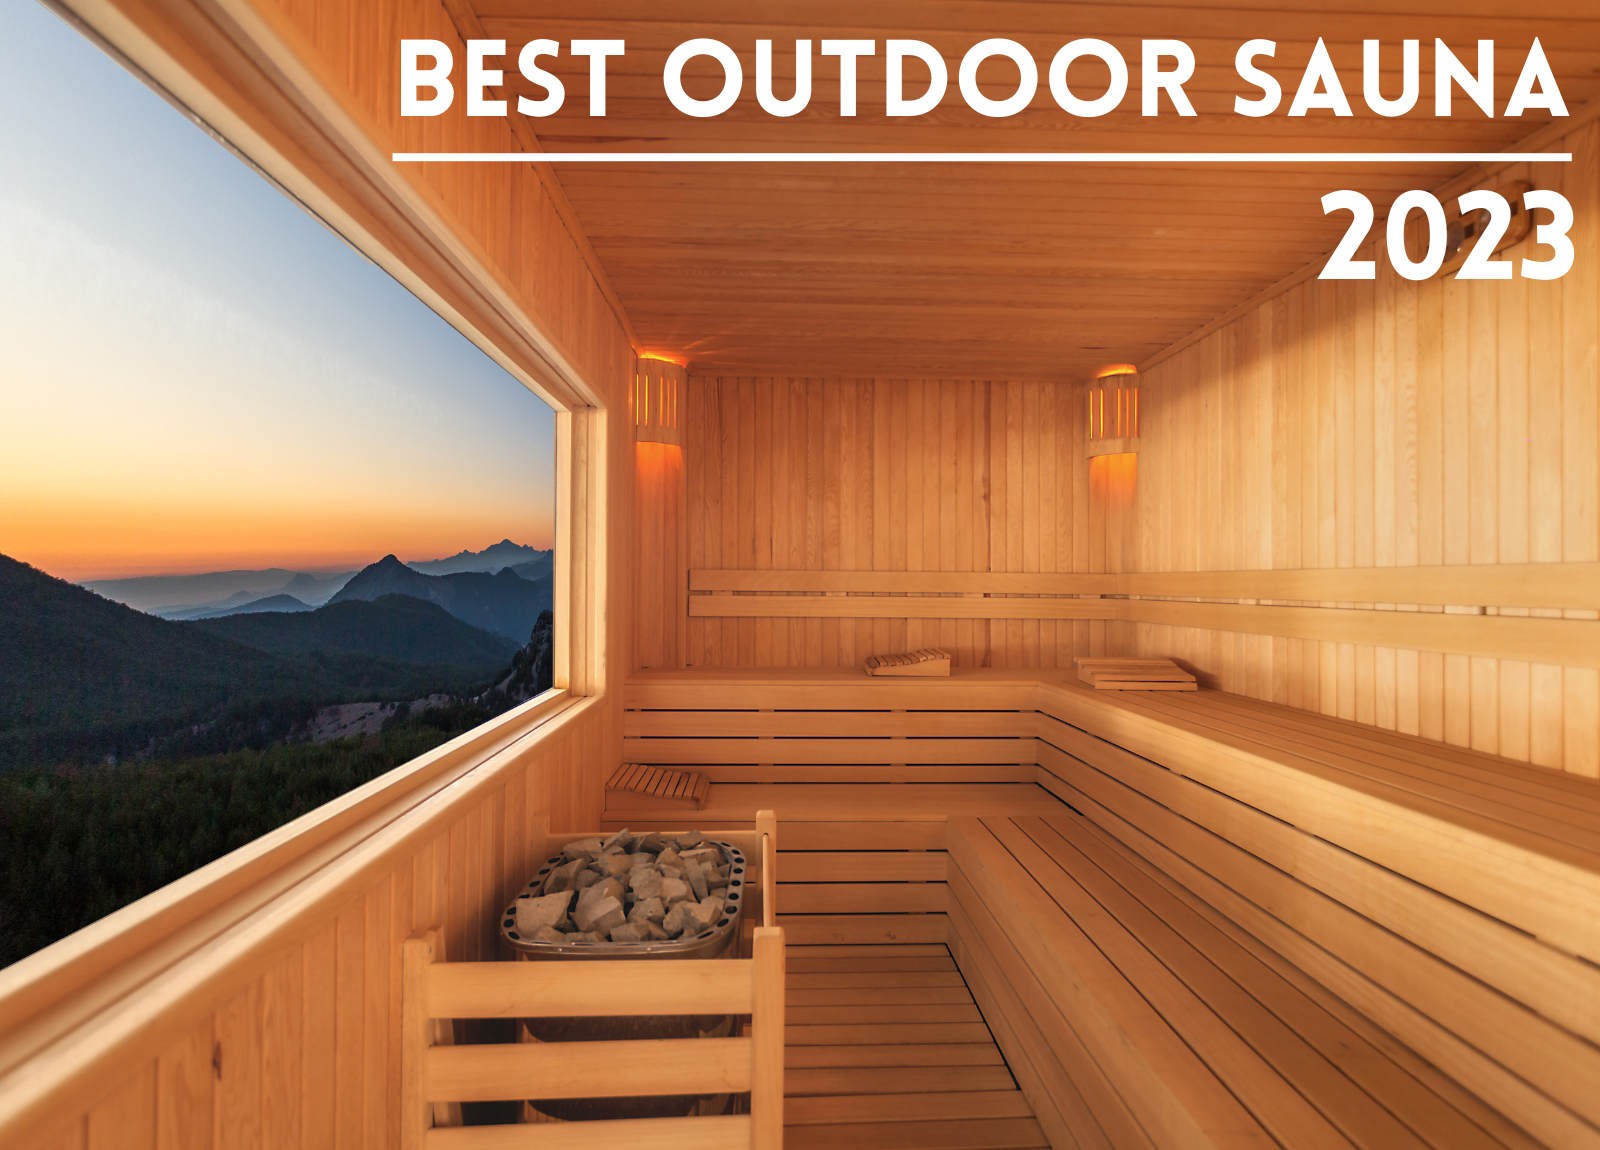 Best Outdoor Sauna Review 2023 - Independent Reviews